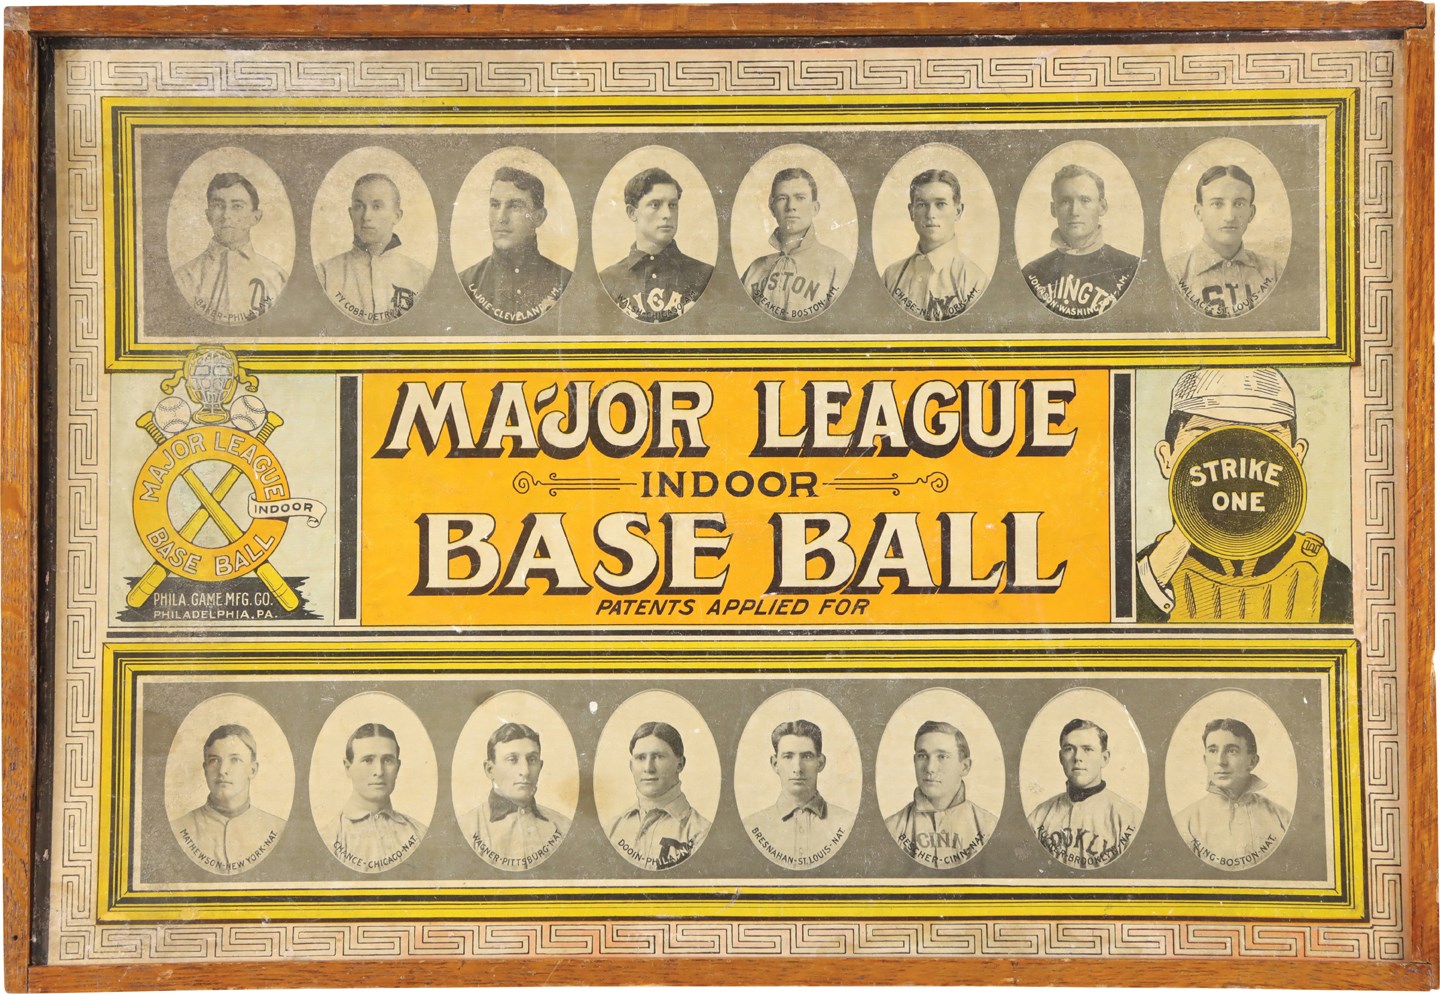 Baseball Memorabilia - Exceptional 1913 Major League Indoor Baseball Game w/Player Portraits on Cover